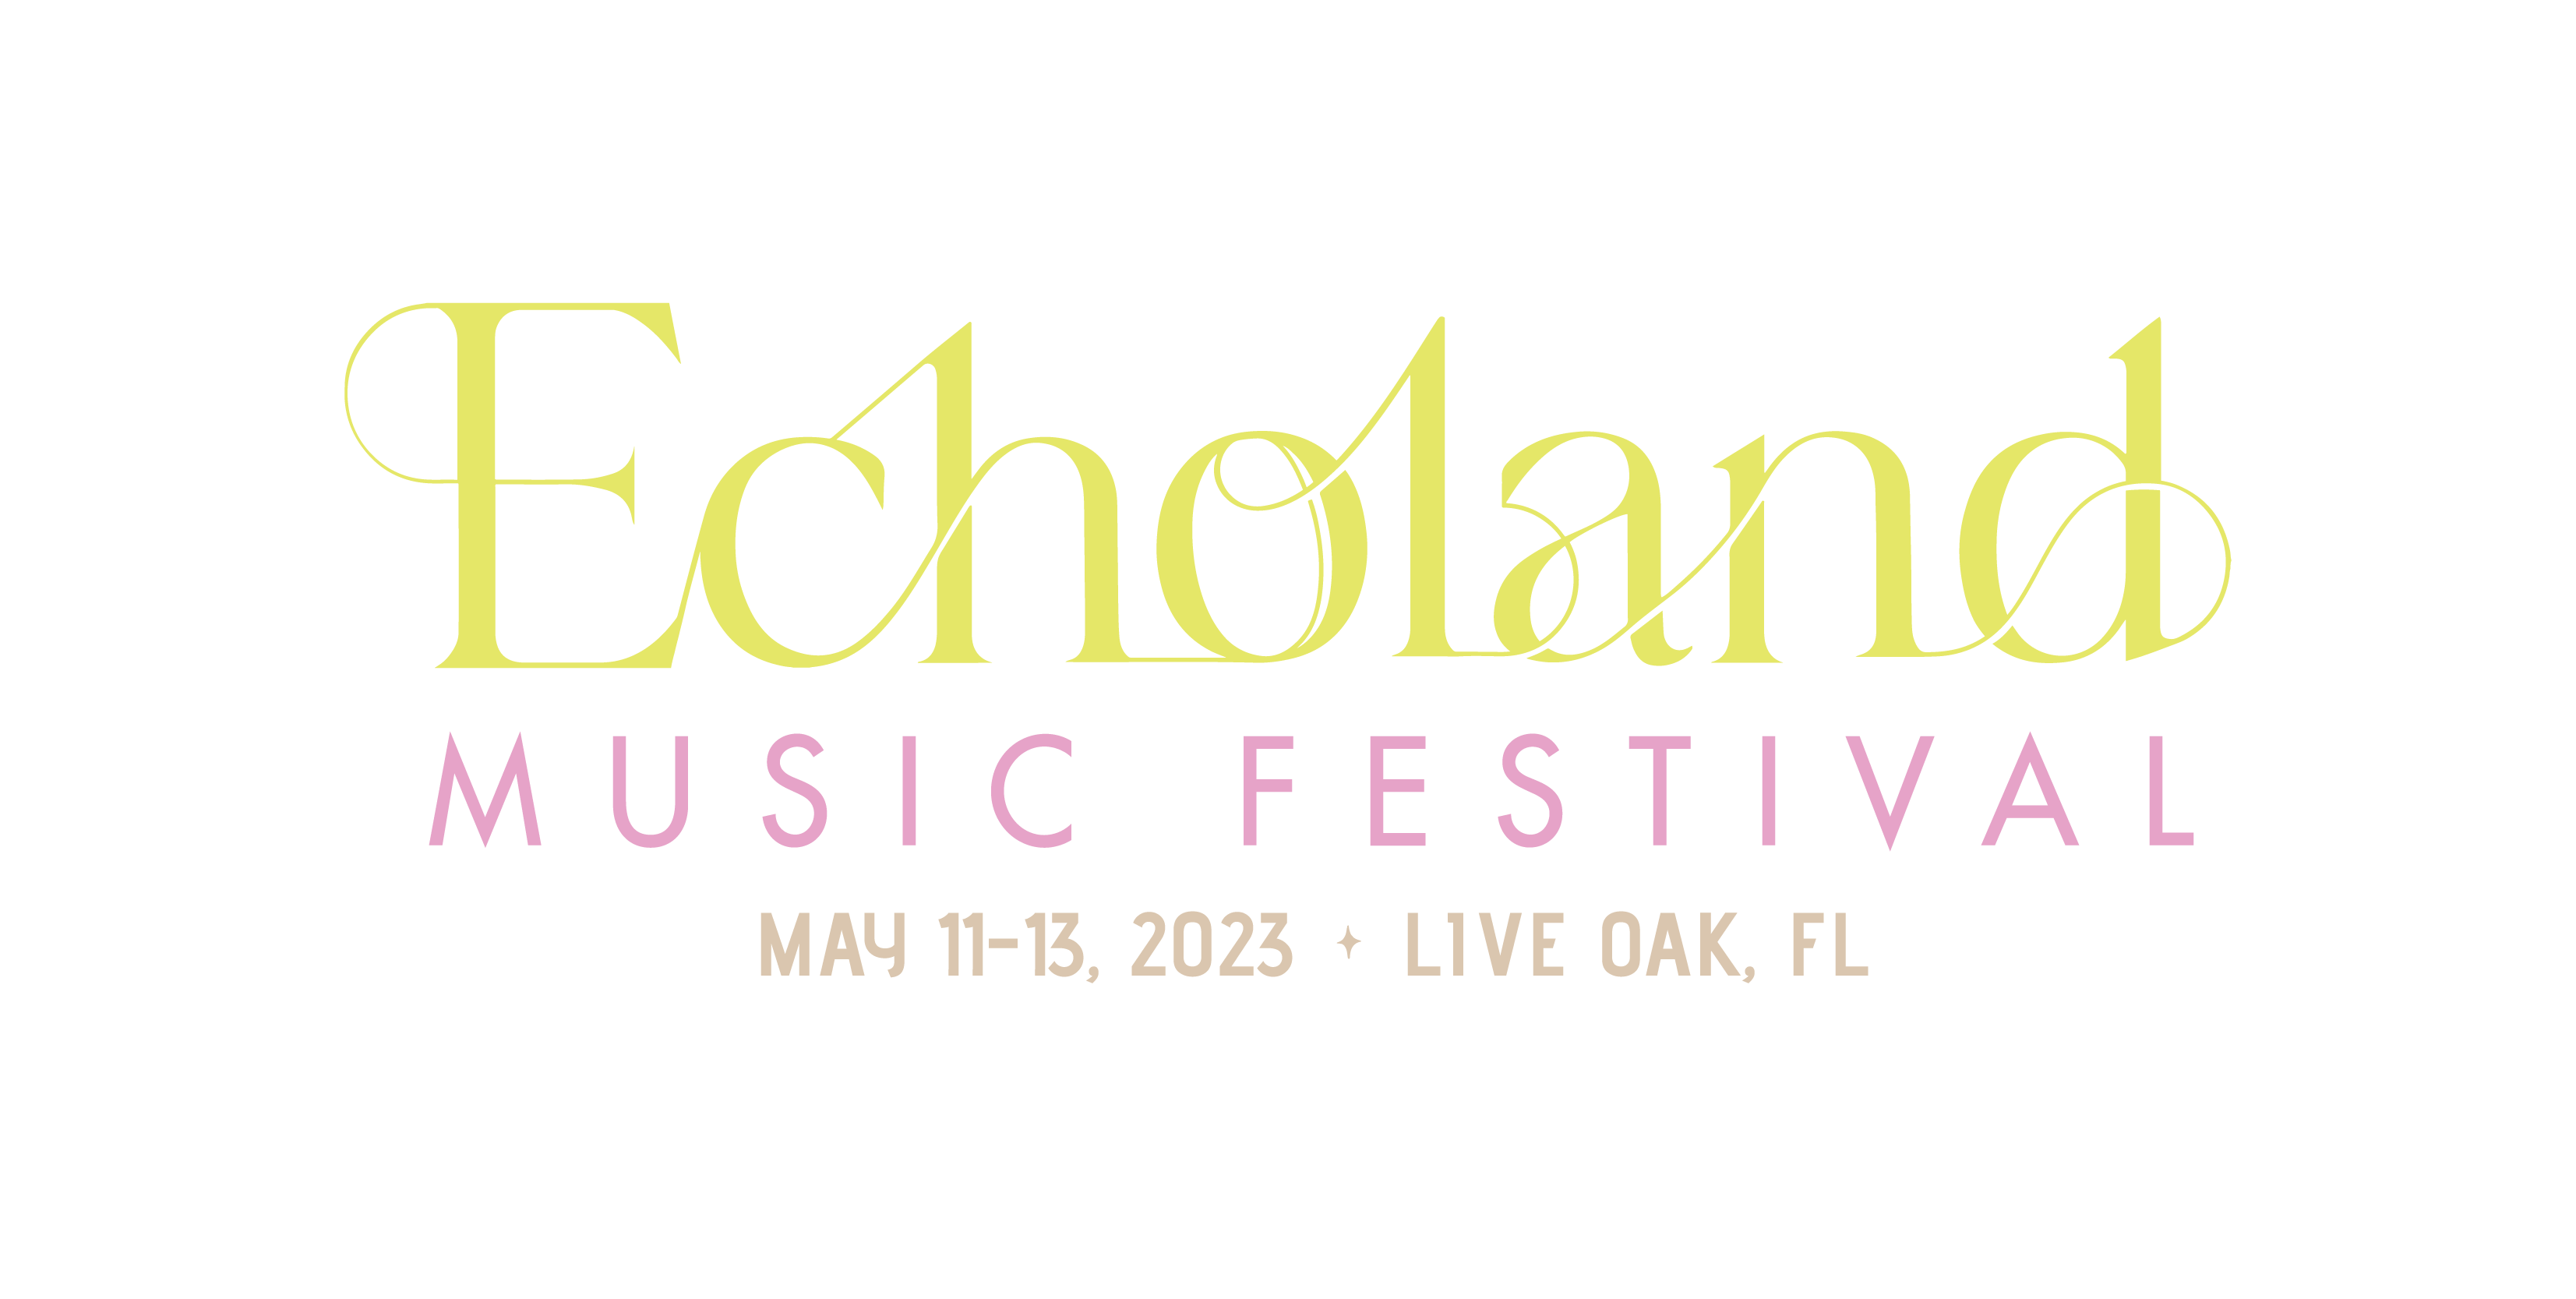 Echoland Music Festival